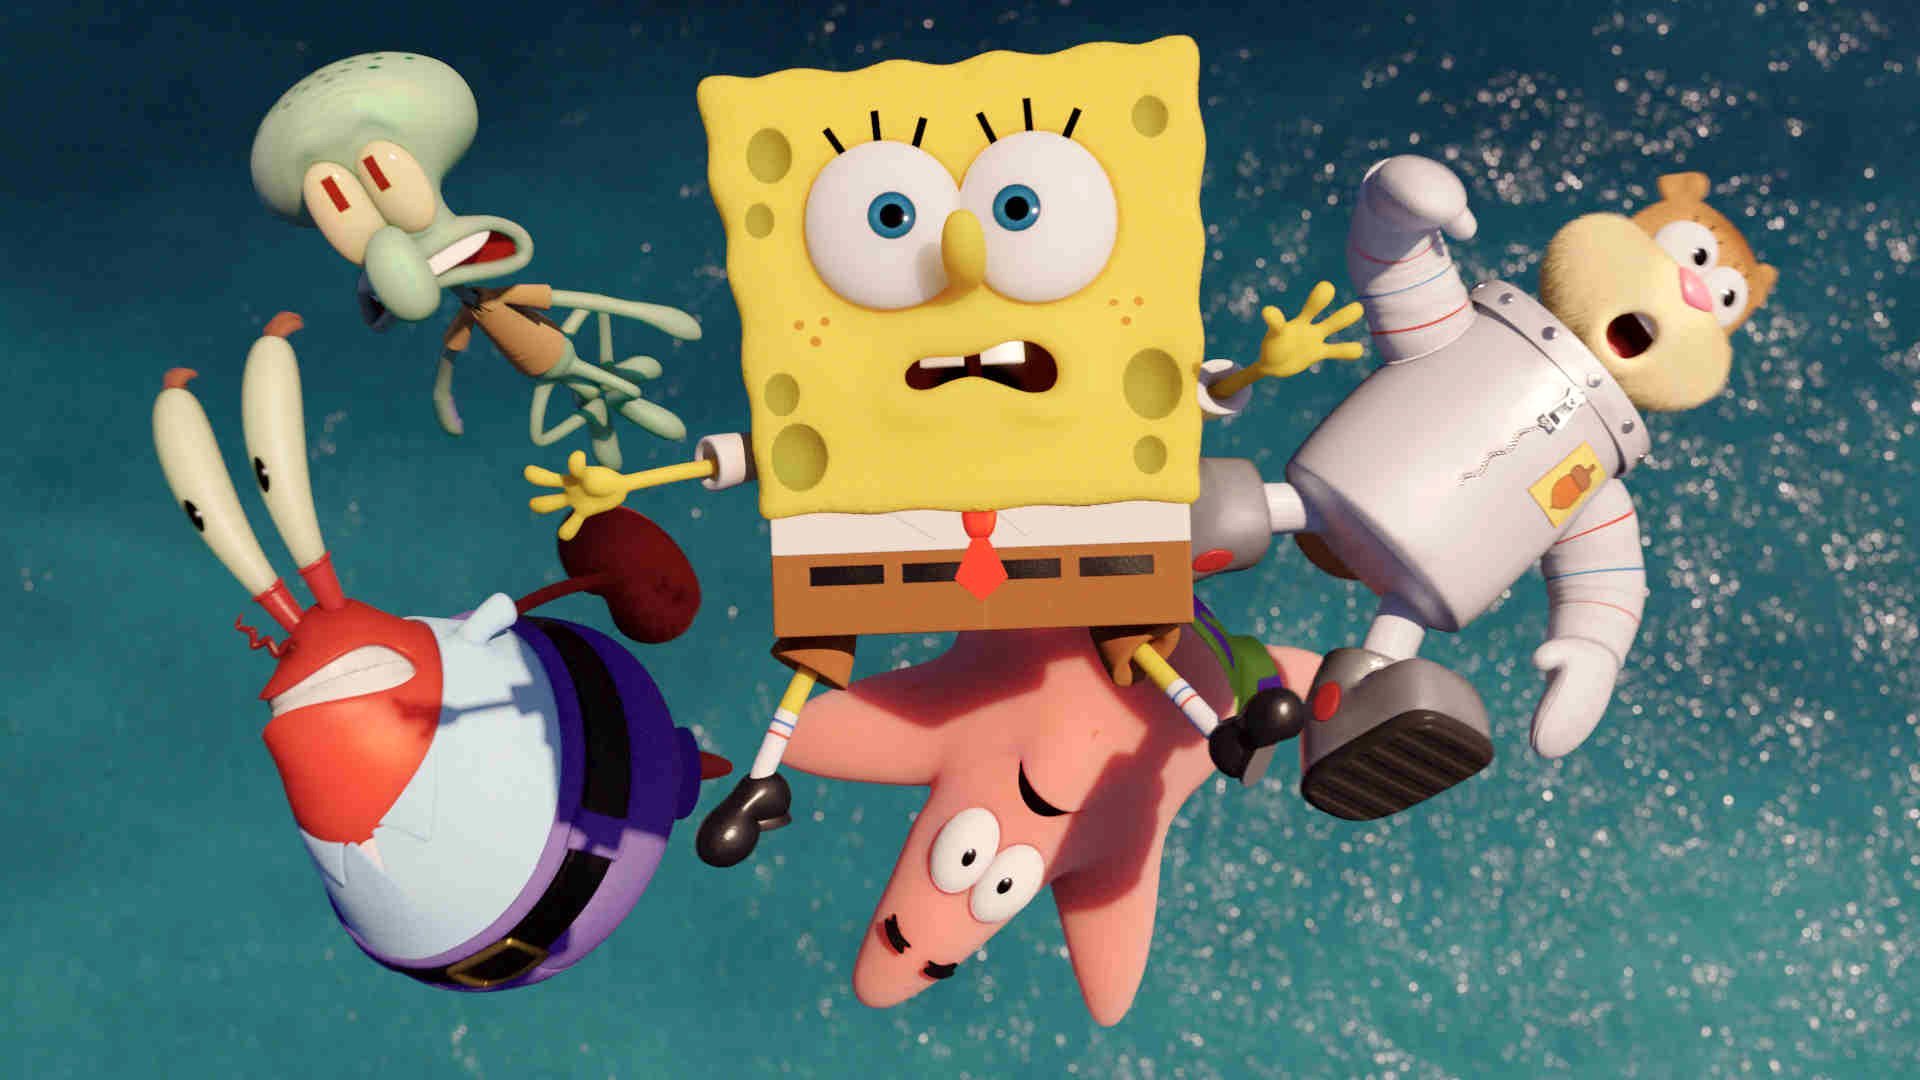 spongebob wallpaper,toy,cartoon,animated cartoon,action figure,baby toys